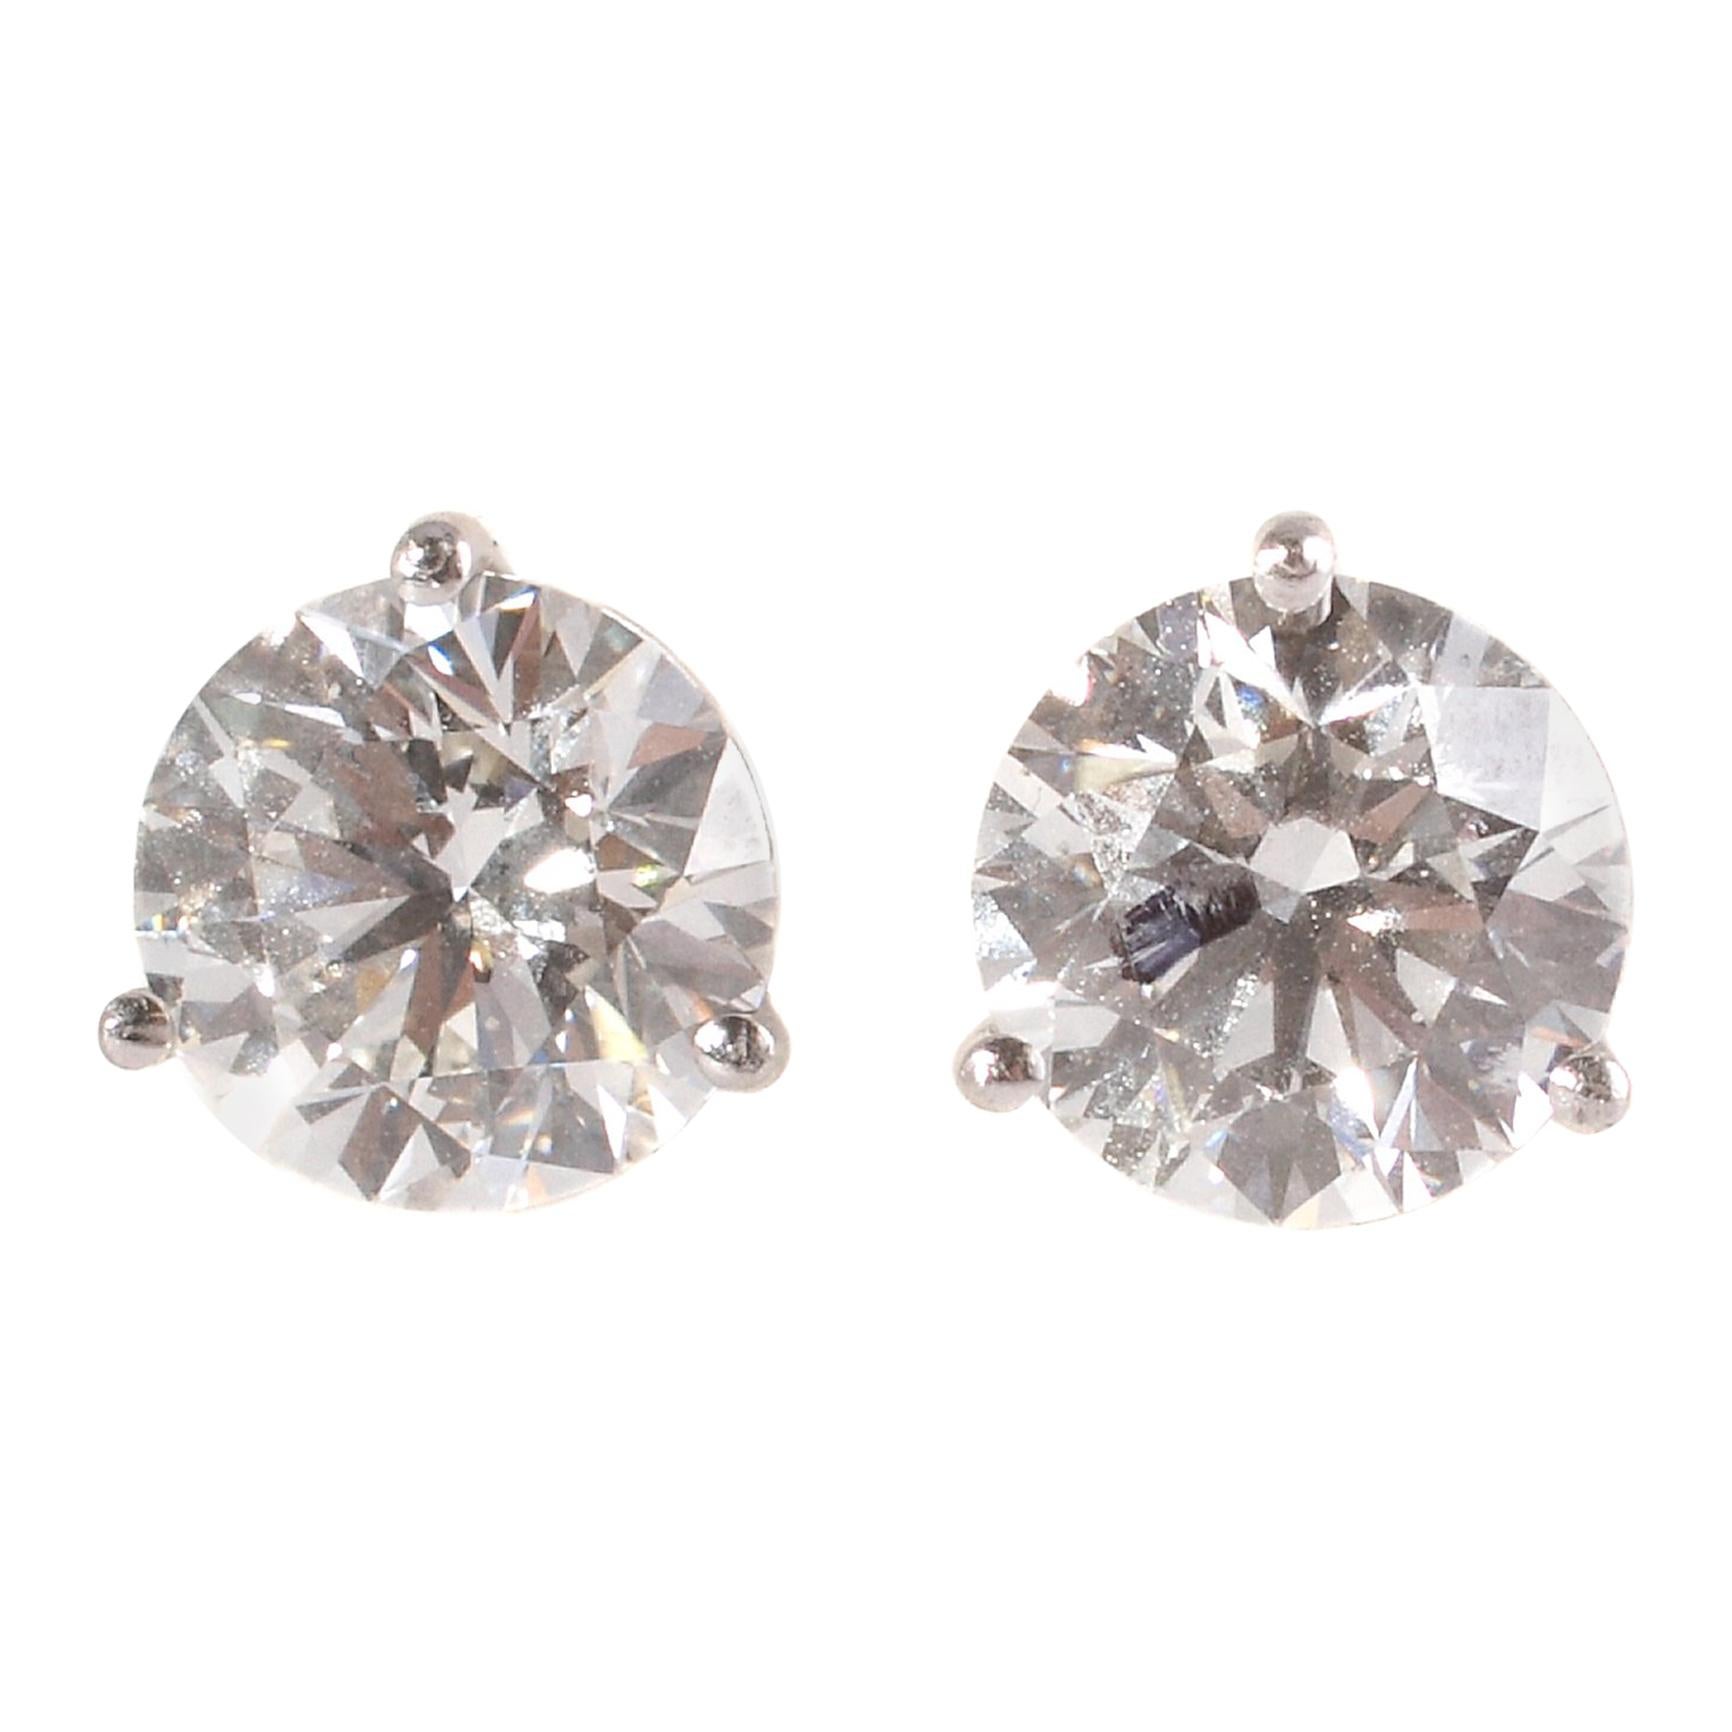 Tiffany & Co. 4.22 Carat Diamond Stud Earrings